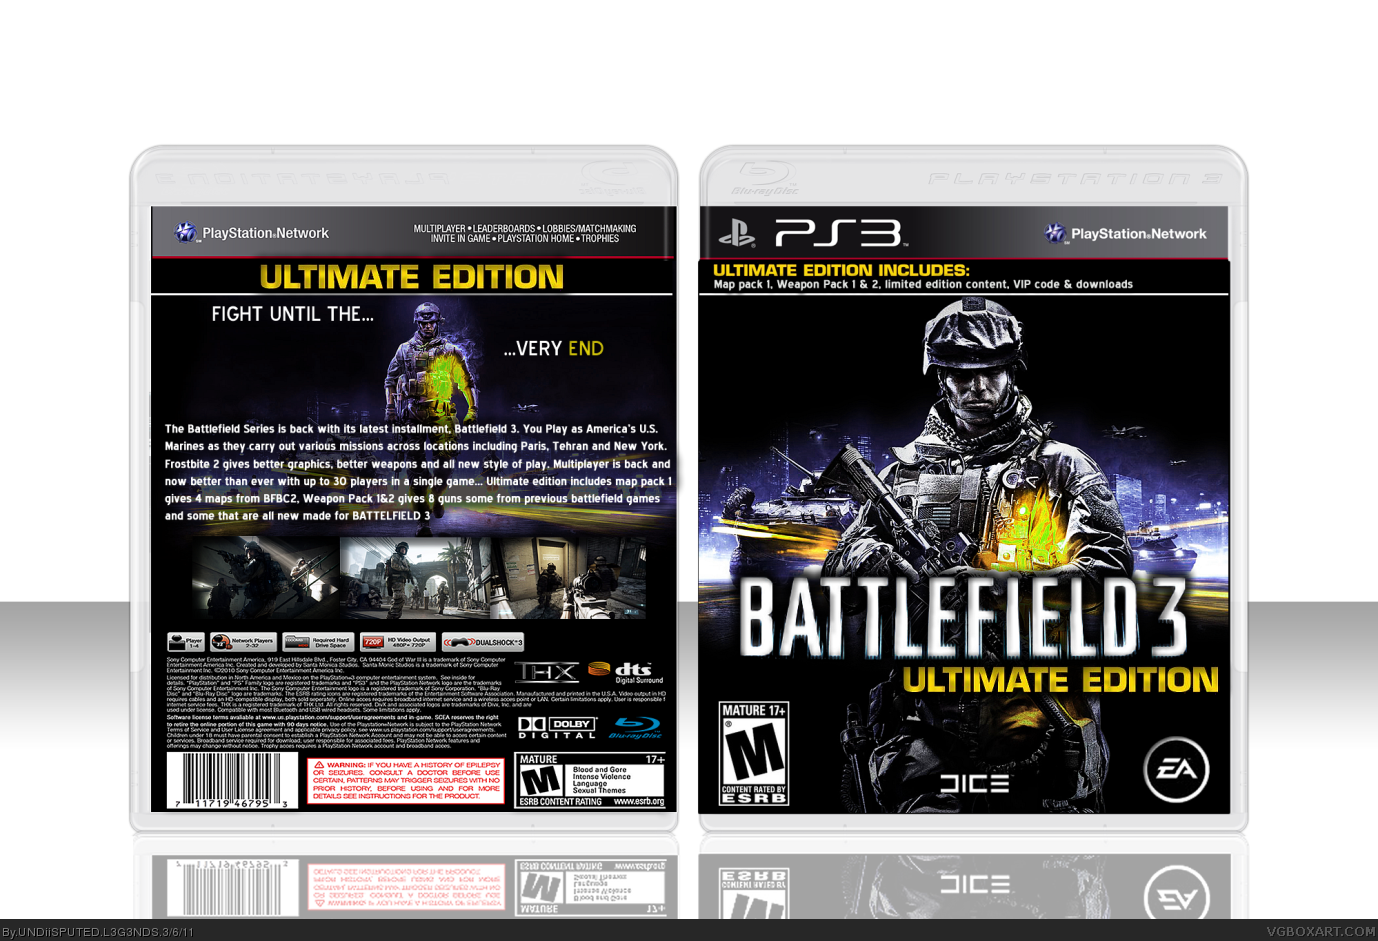 BattleField 3 Ultimate Edition box cover